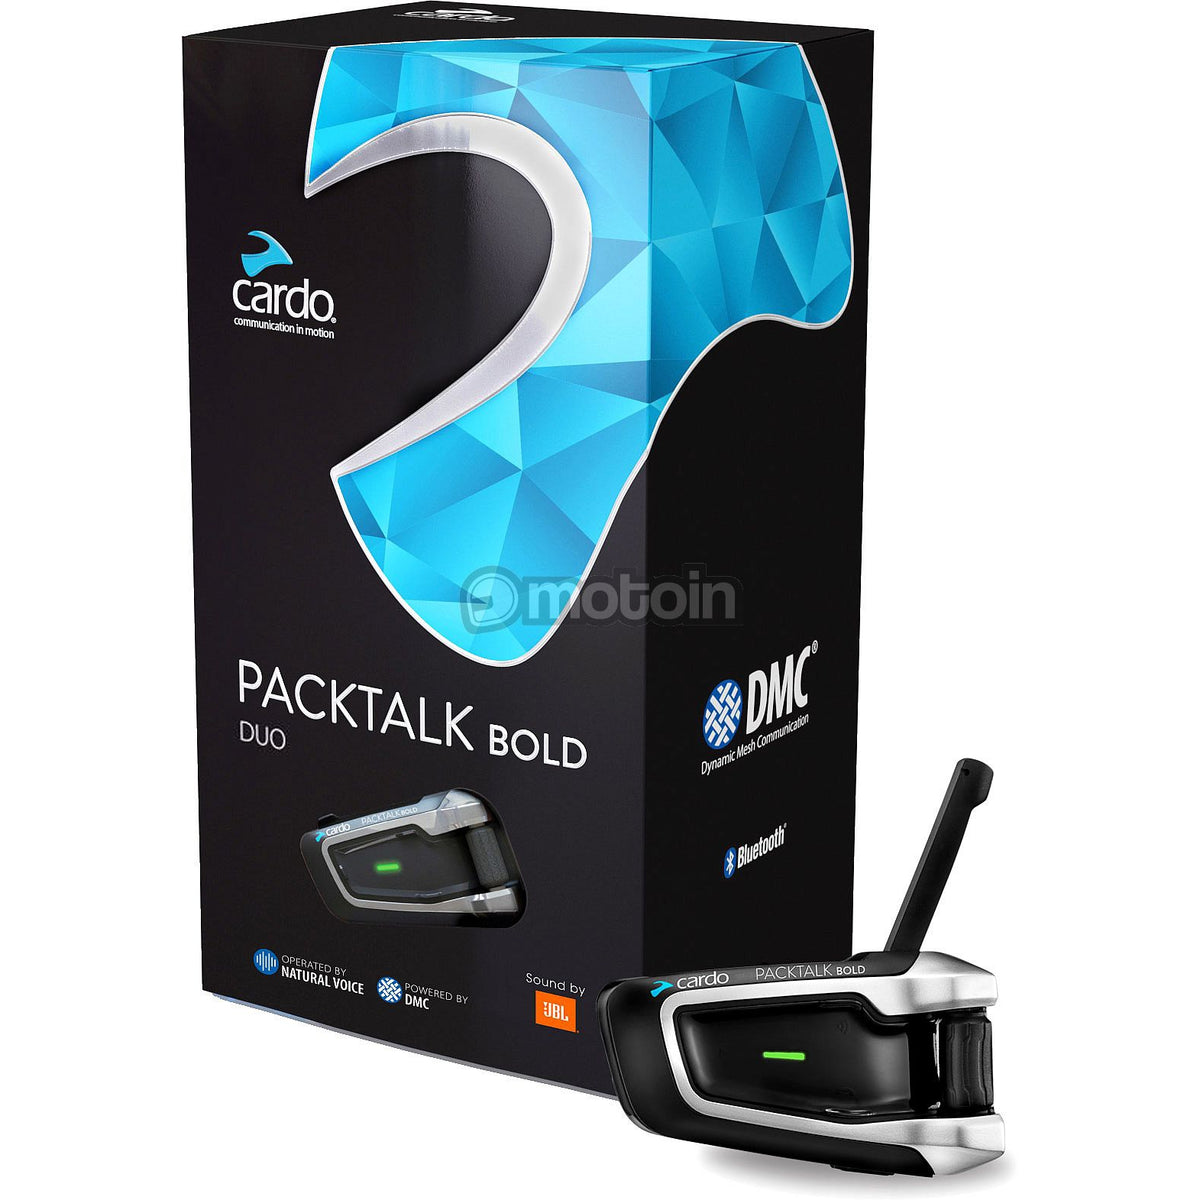 Cardo Packtalk Bold Communication System